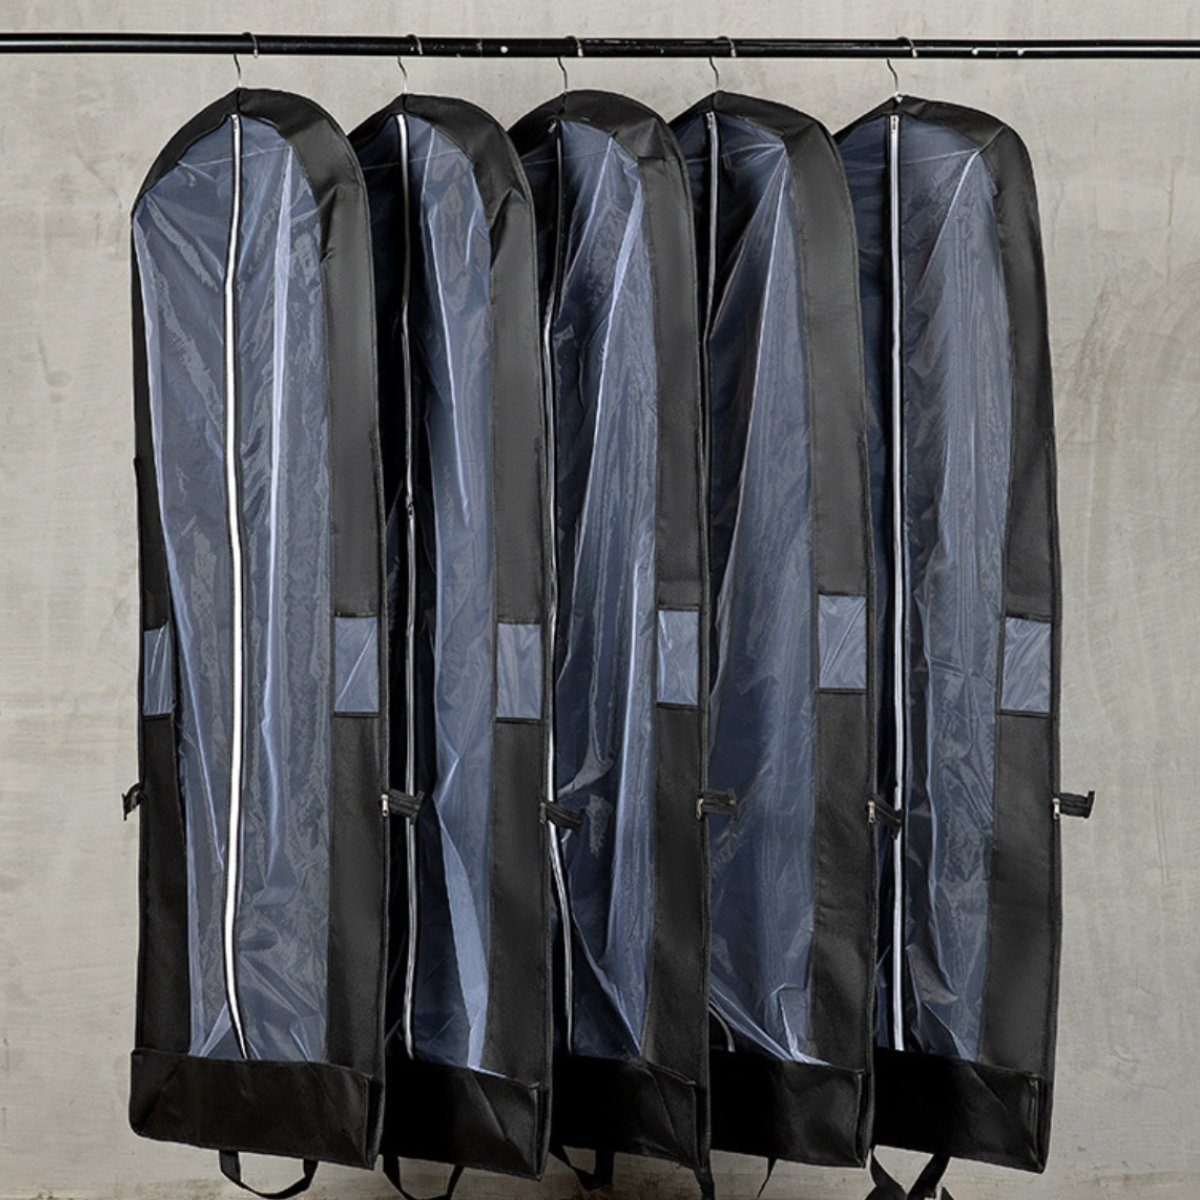 Jormftte Kleidersack Faltbar mit Reißverschluss,Transport Kleidersack Atmungsaktiver